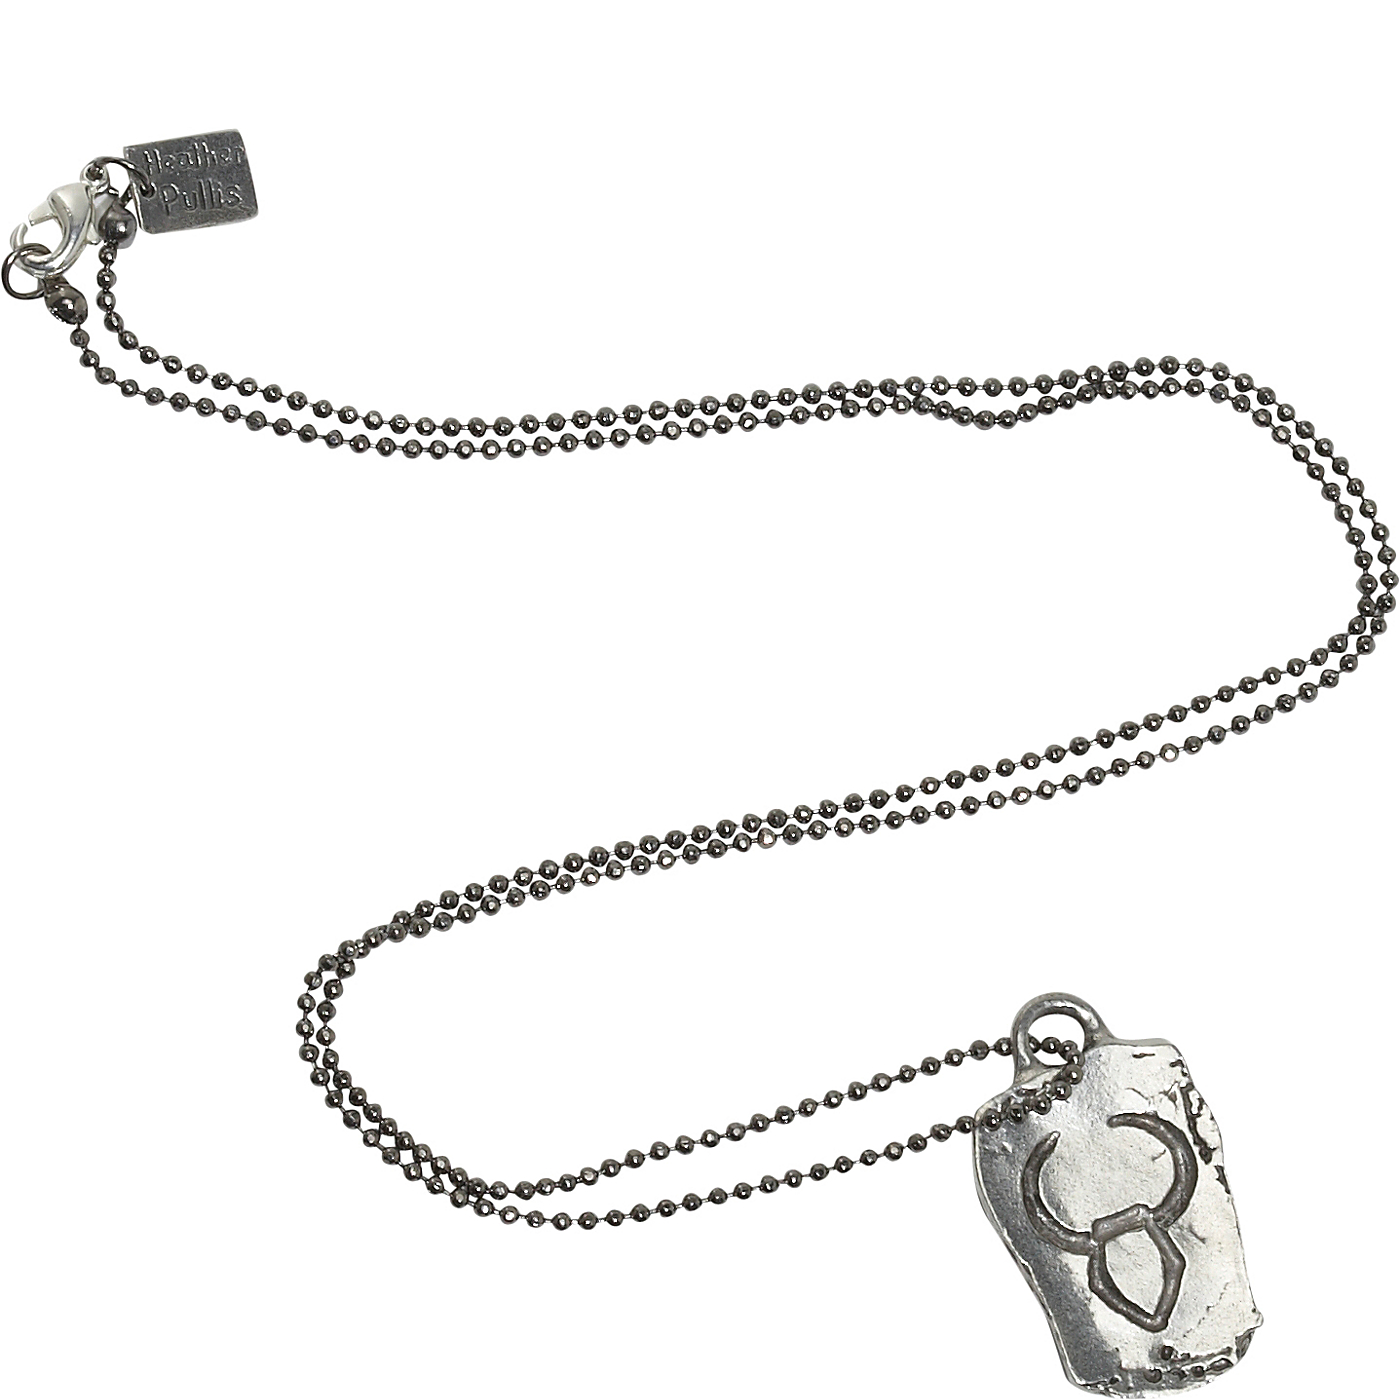 Heather Pullis Designs Taurus Necklace After 20% off $30.40